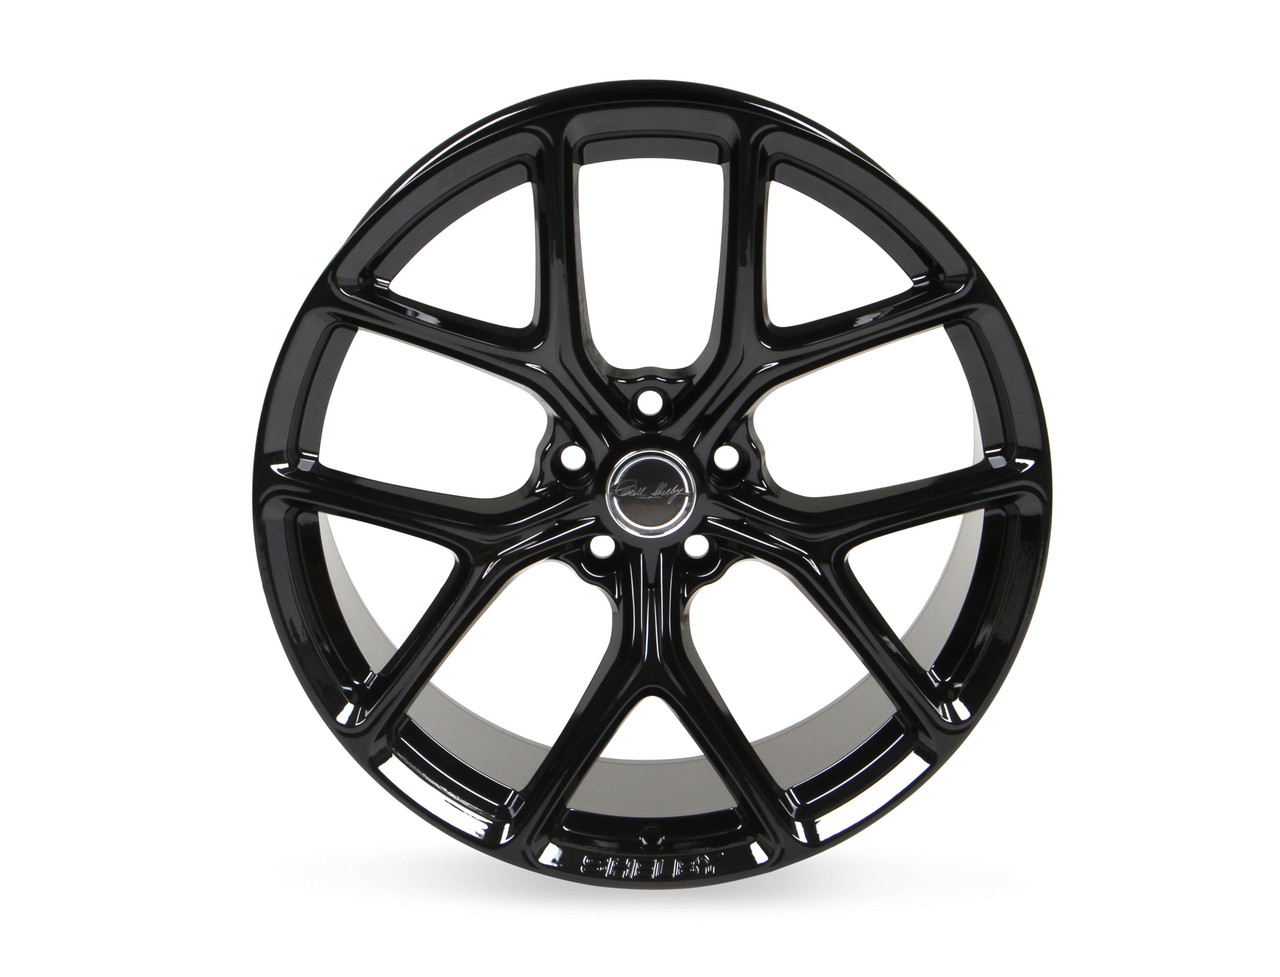 CS3-215455-B Carroll Shelby Wheels 20 x 11 in 5 x 114.3 50mm Offset Gloss Black